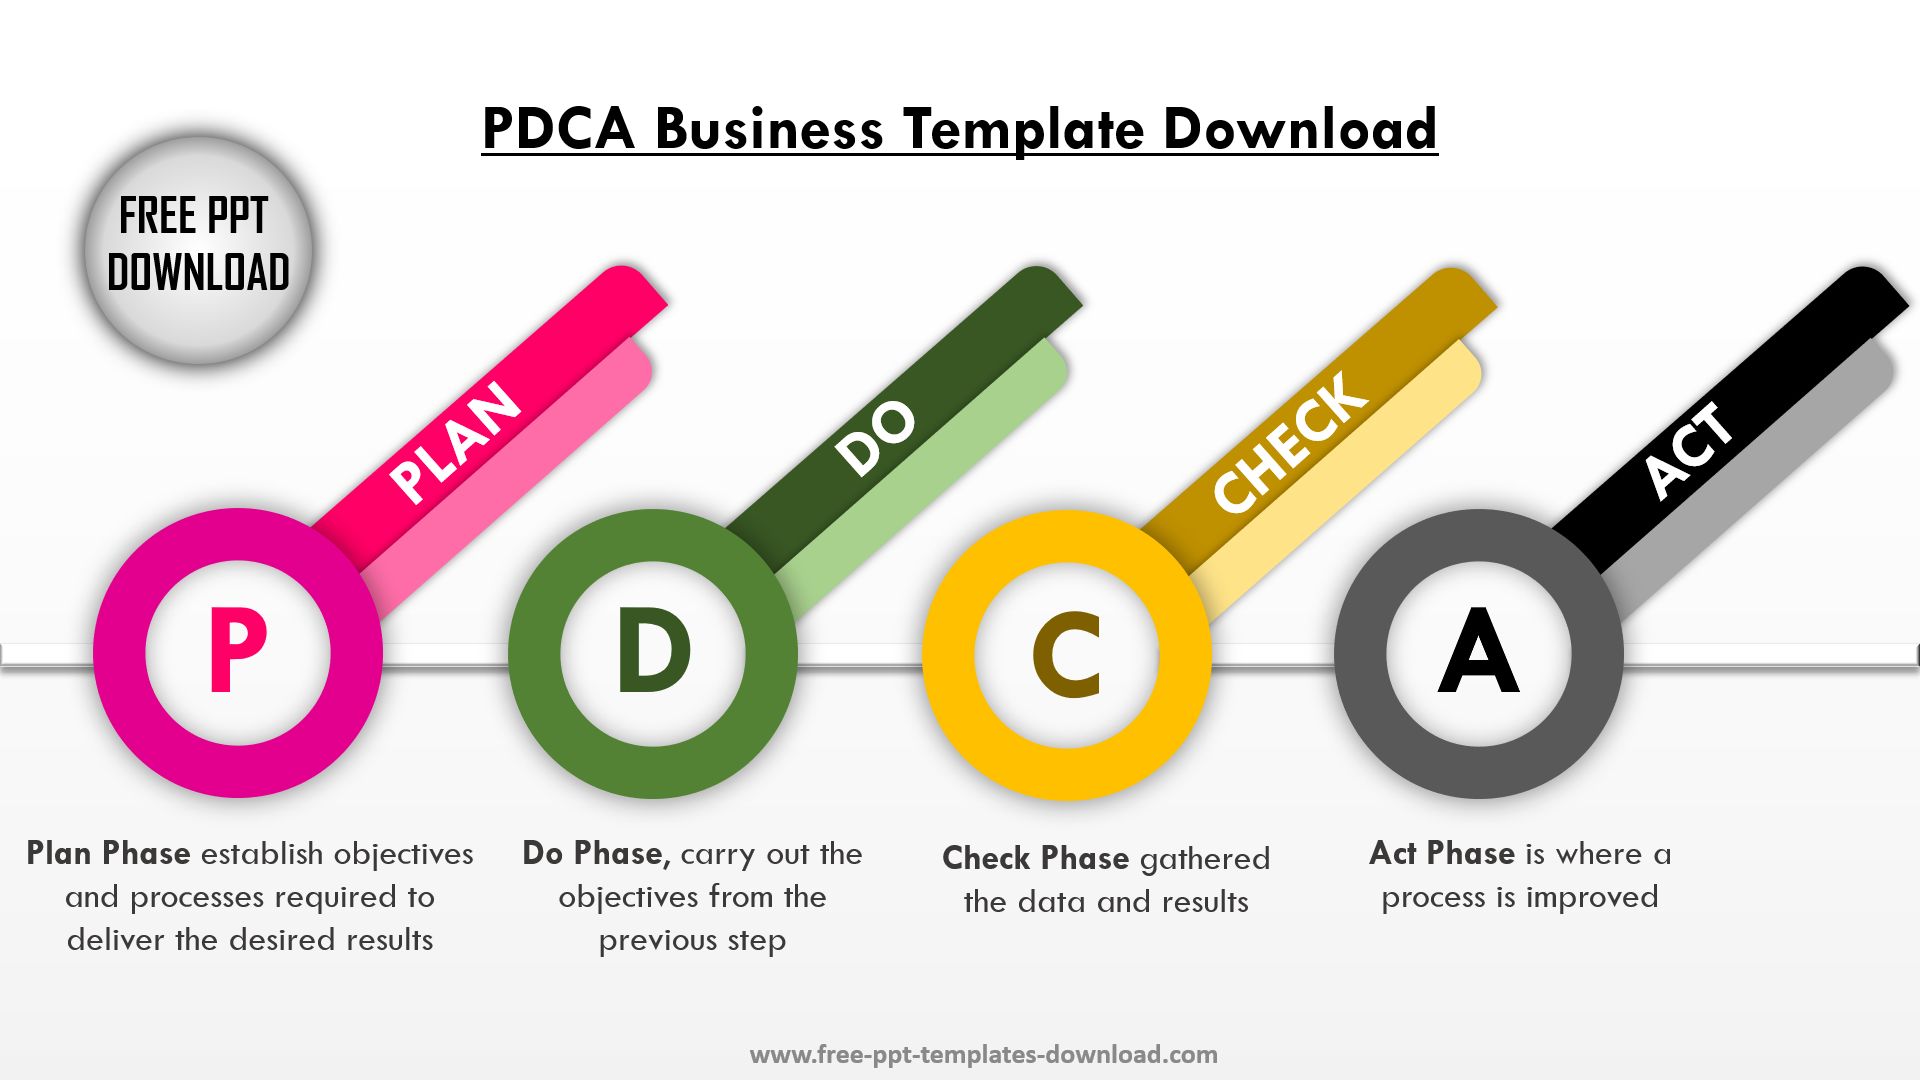 free-ppt-templates-download-en-linkedin-pdca-business-free-ppt